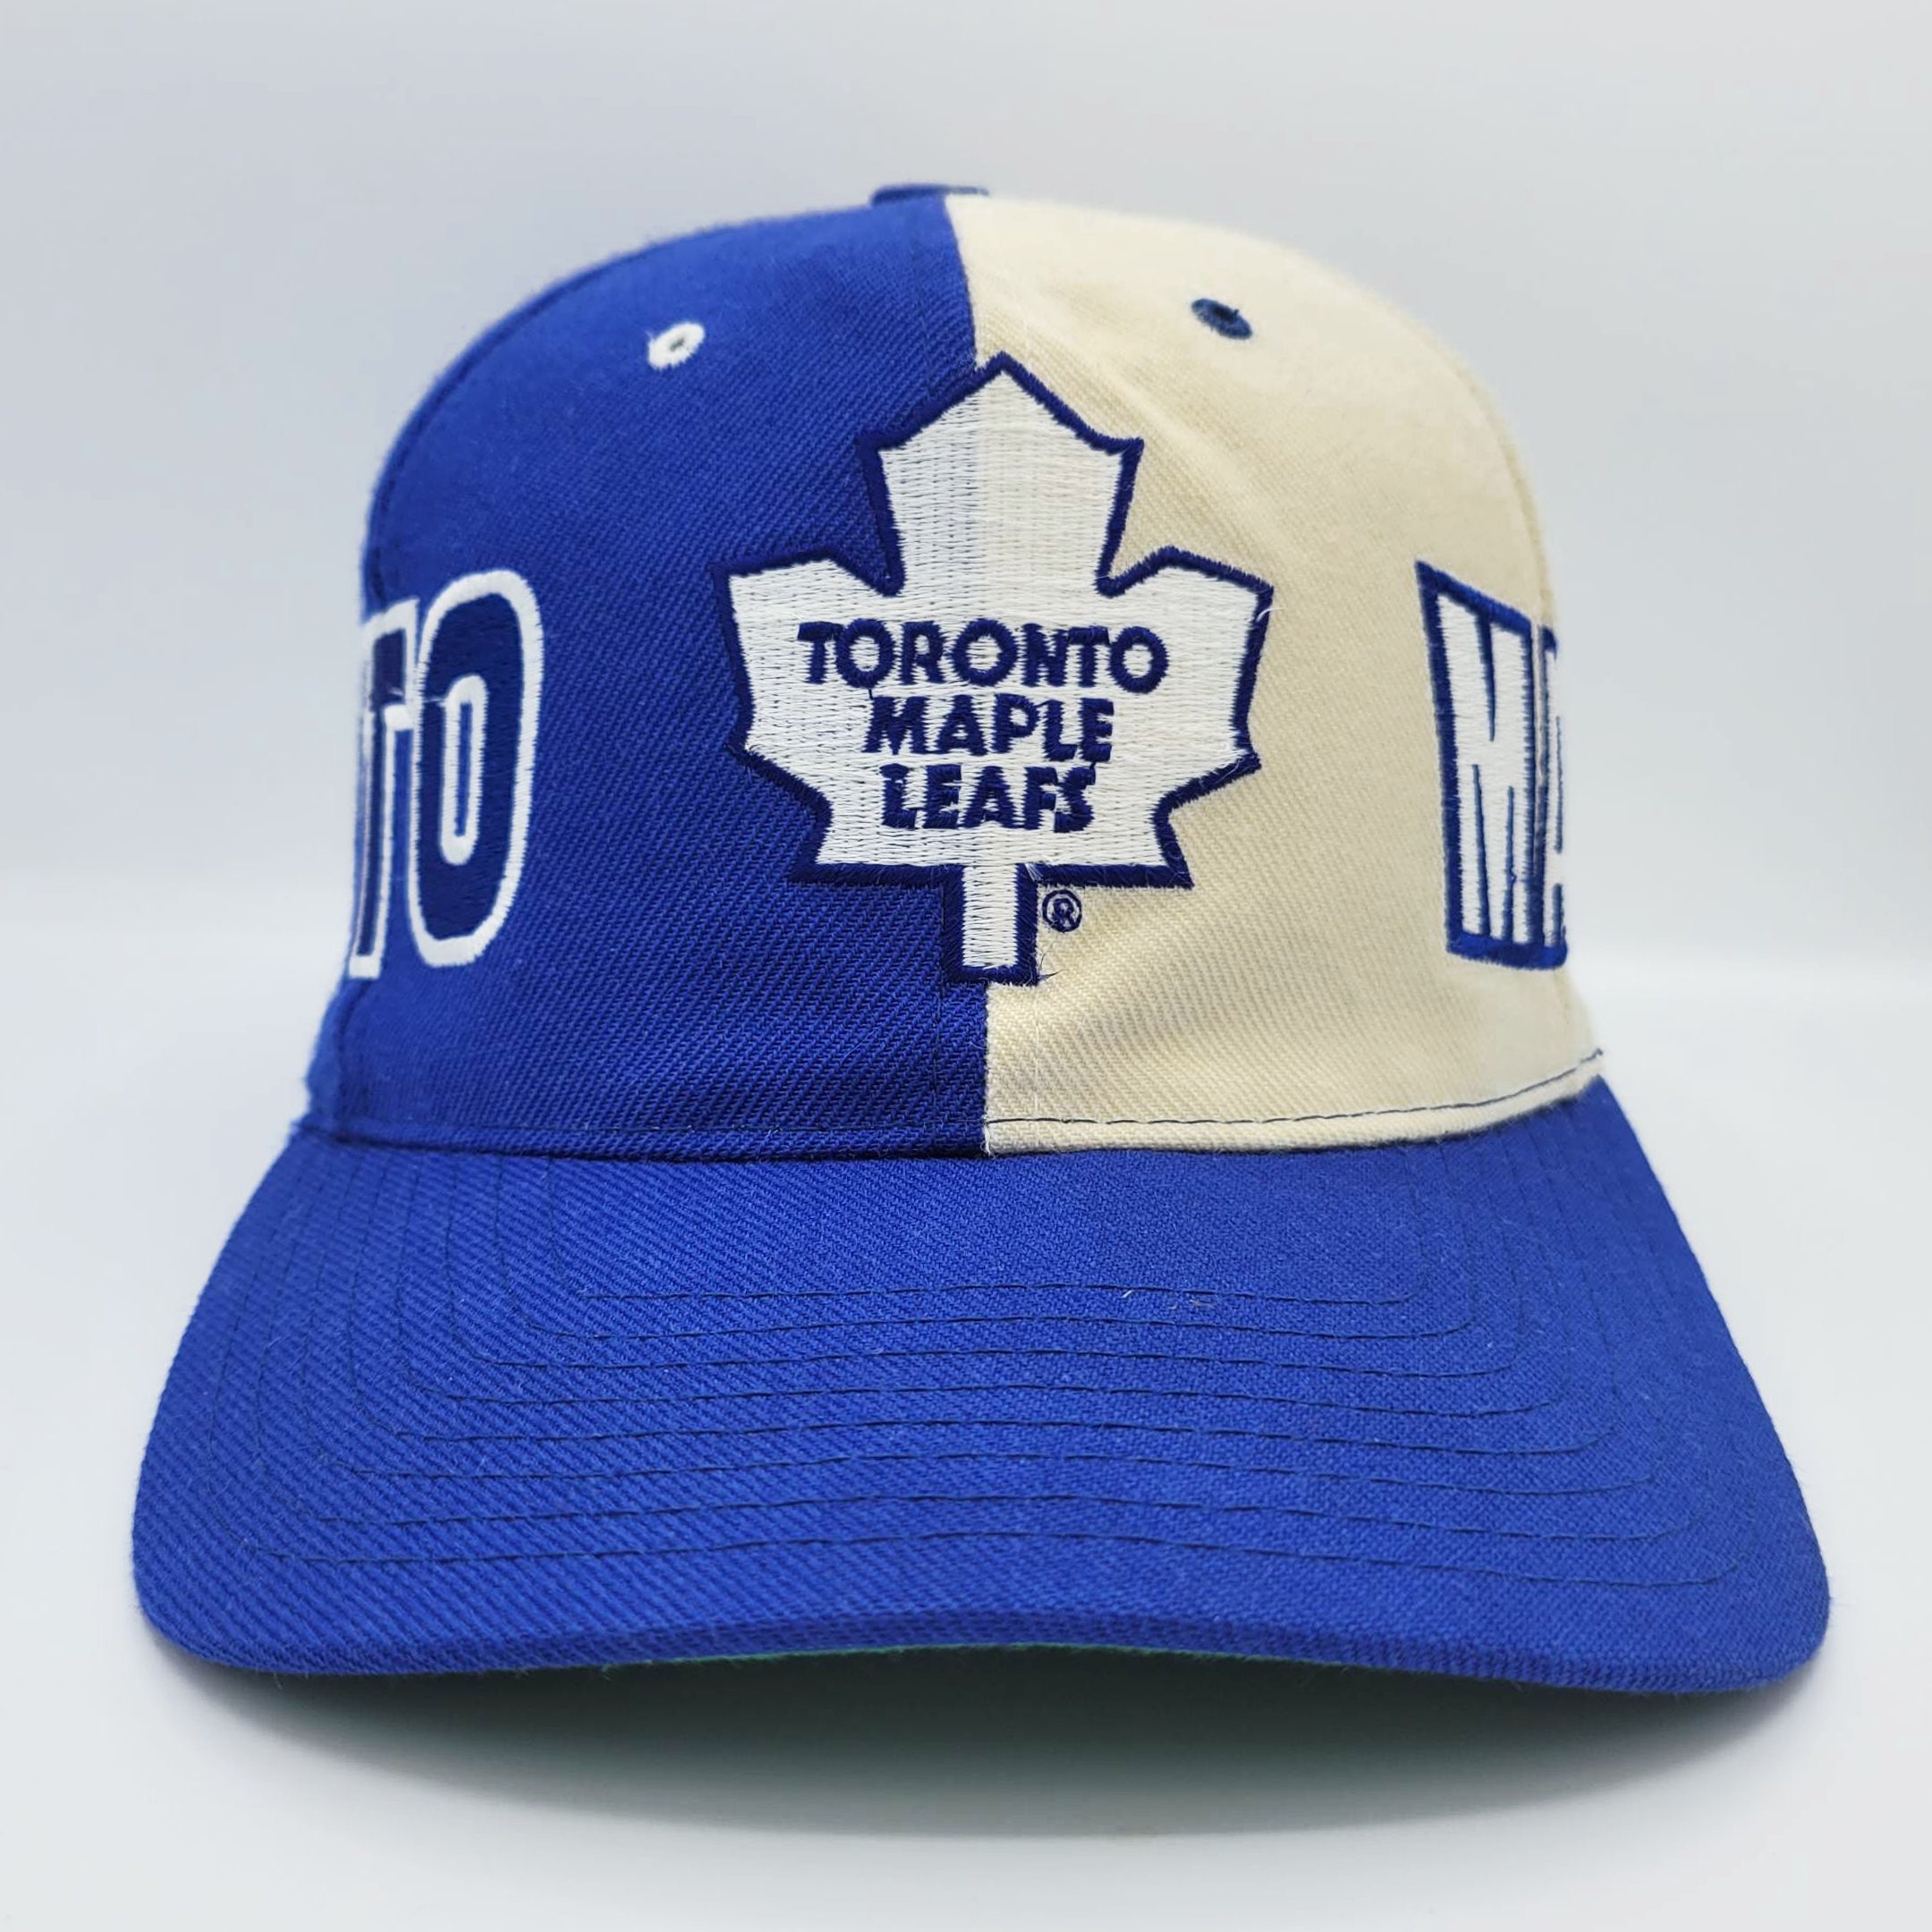 NHL Boston Bruins CCM Original 6 / Six Snapback Adjustable Cap Hat Rare  NEW!